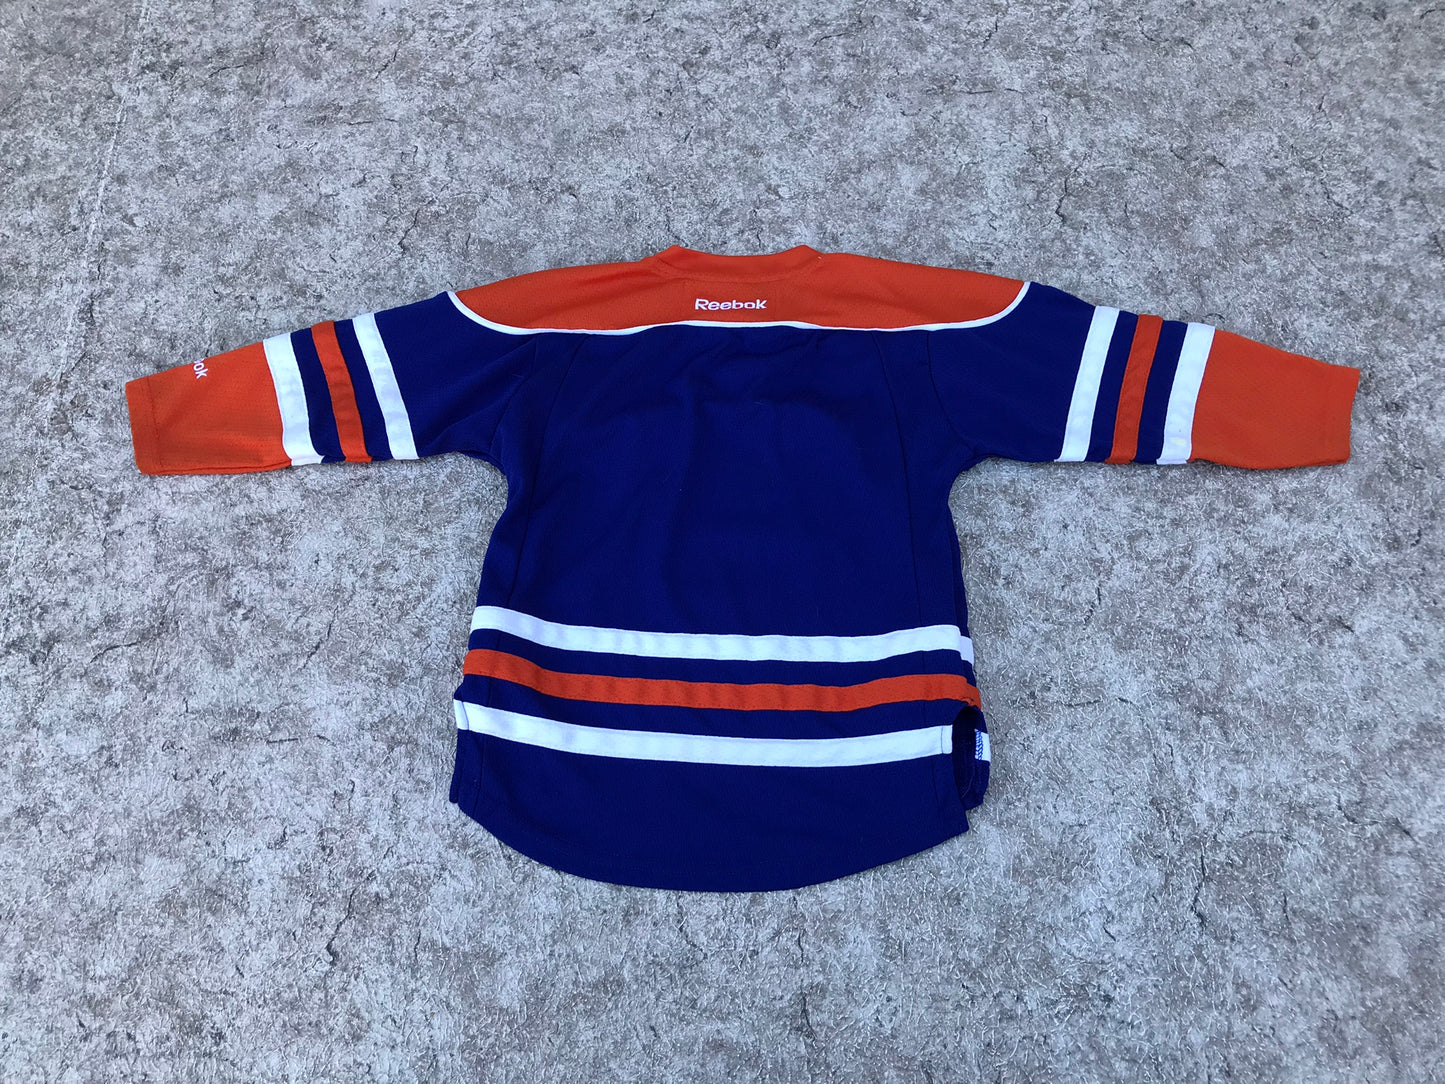 Hockey Jersey Child Size 4-7 Edmonton Oilers Blue Orange As New Excellent